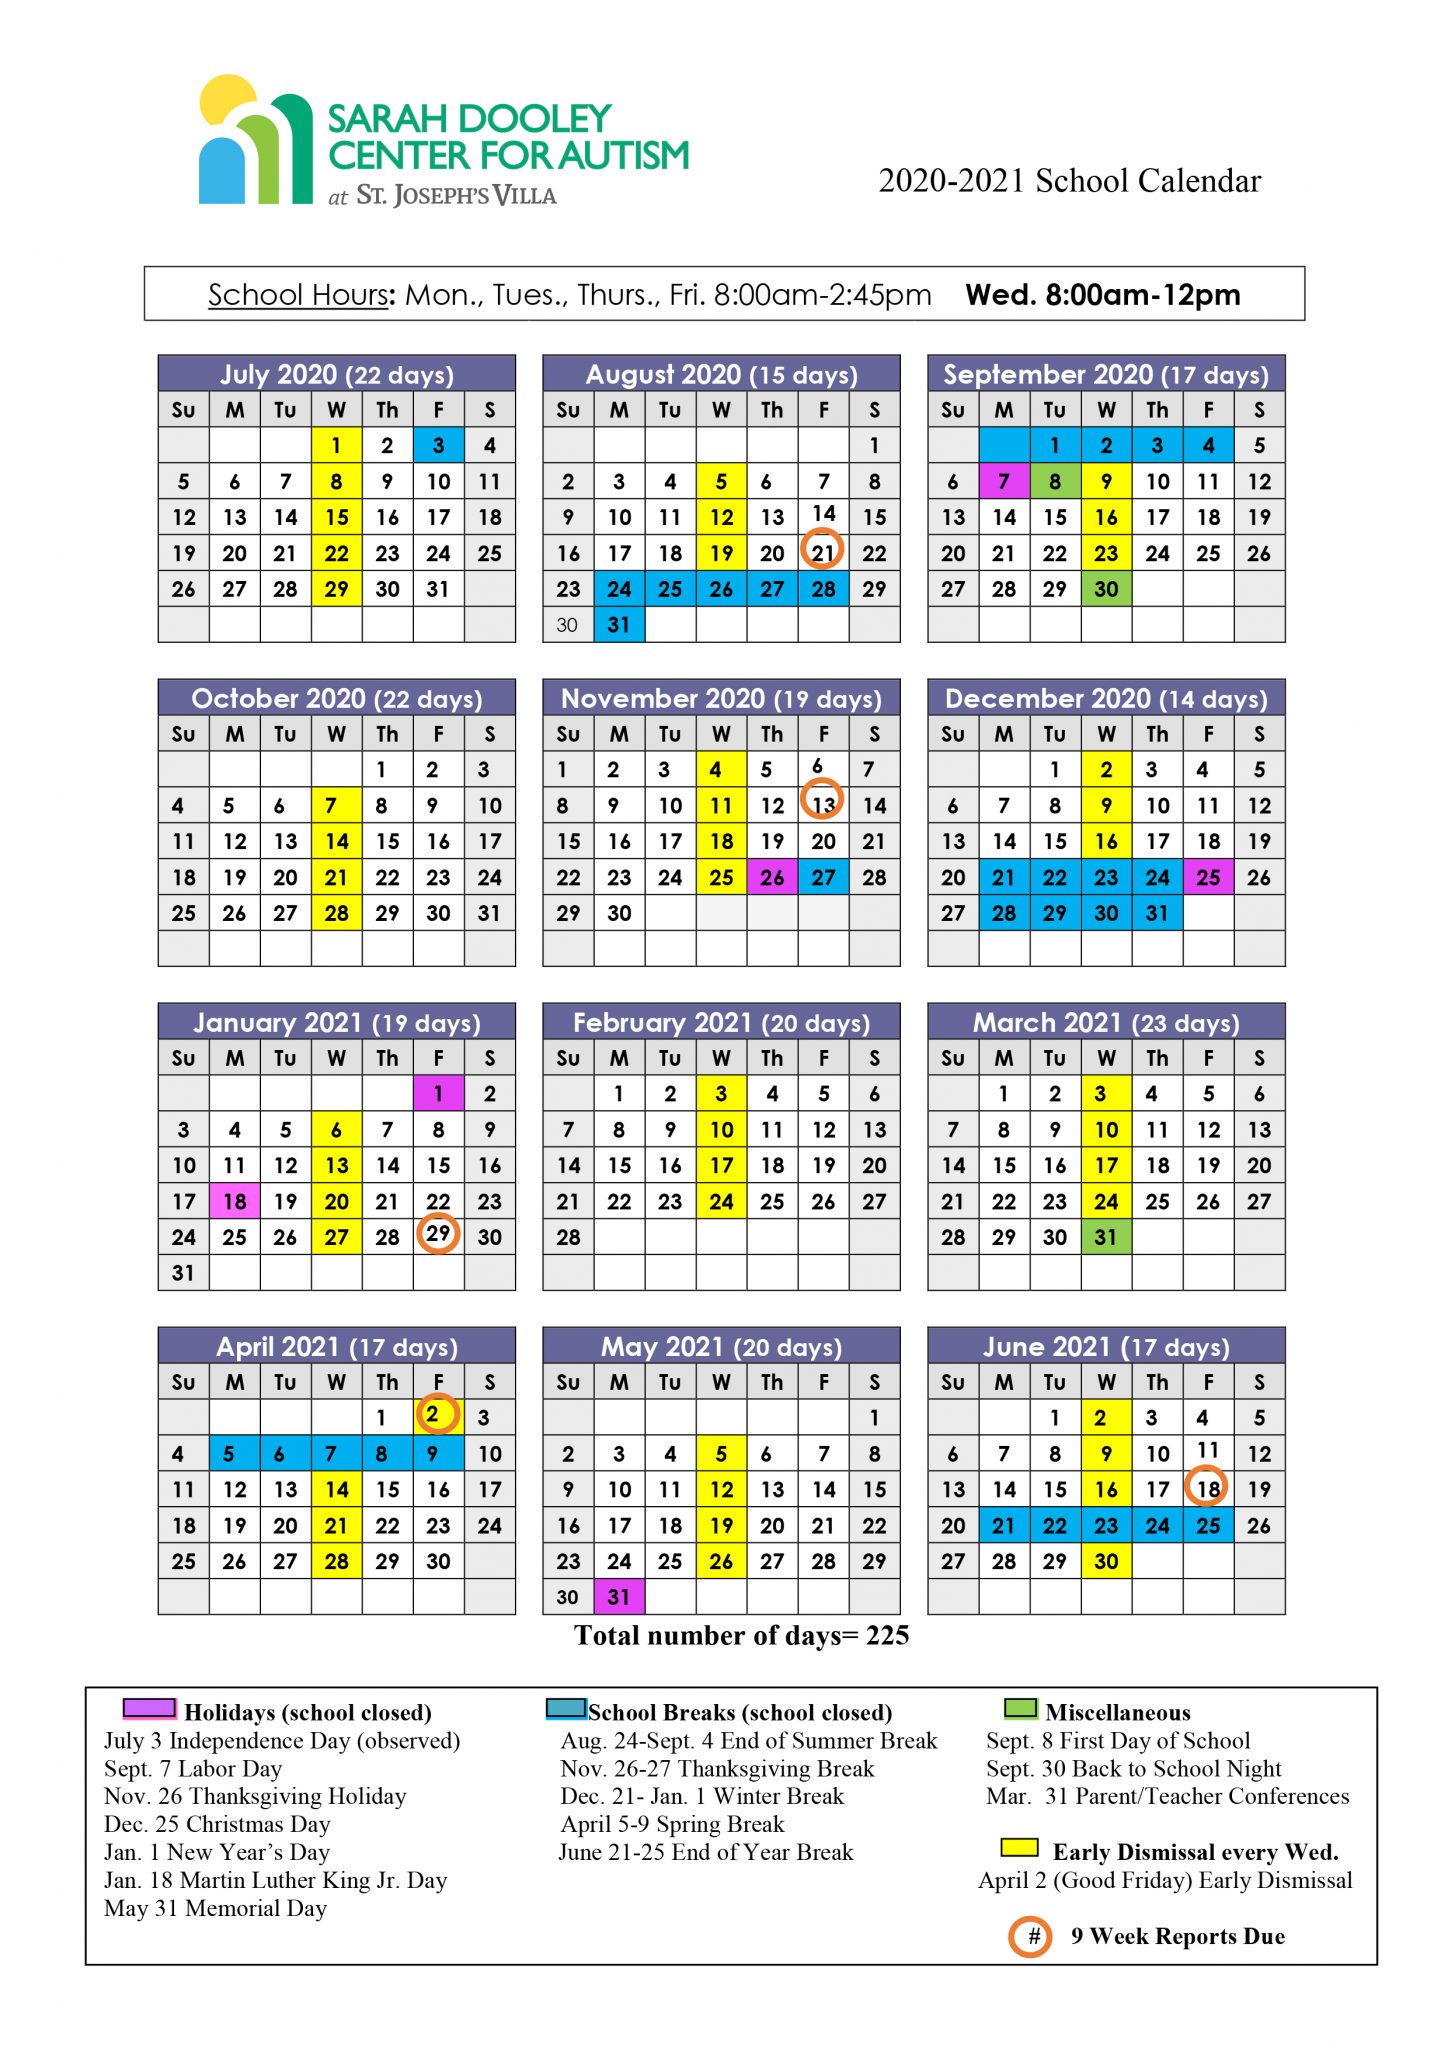 School Calendar Sarah Dooley Center for Autism Richmond VA